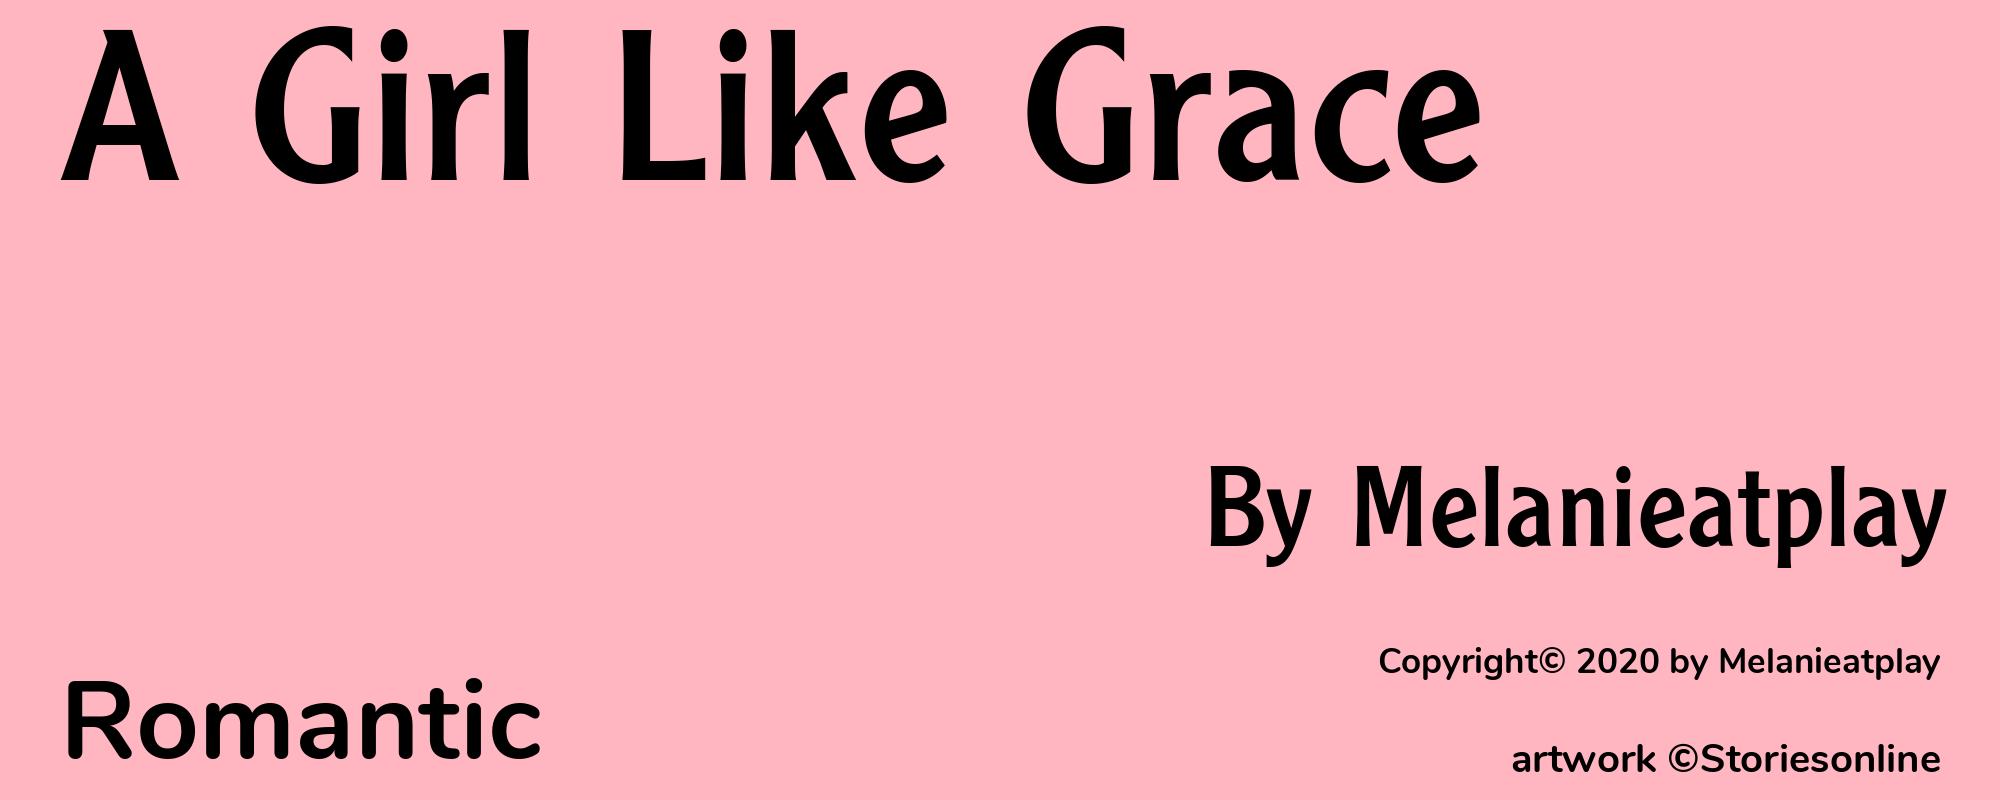 A Girl Like Grace - Cover